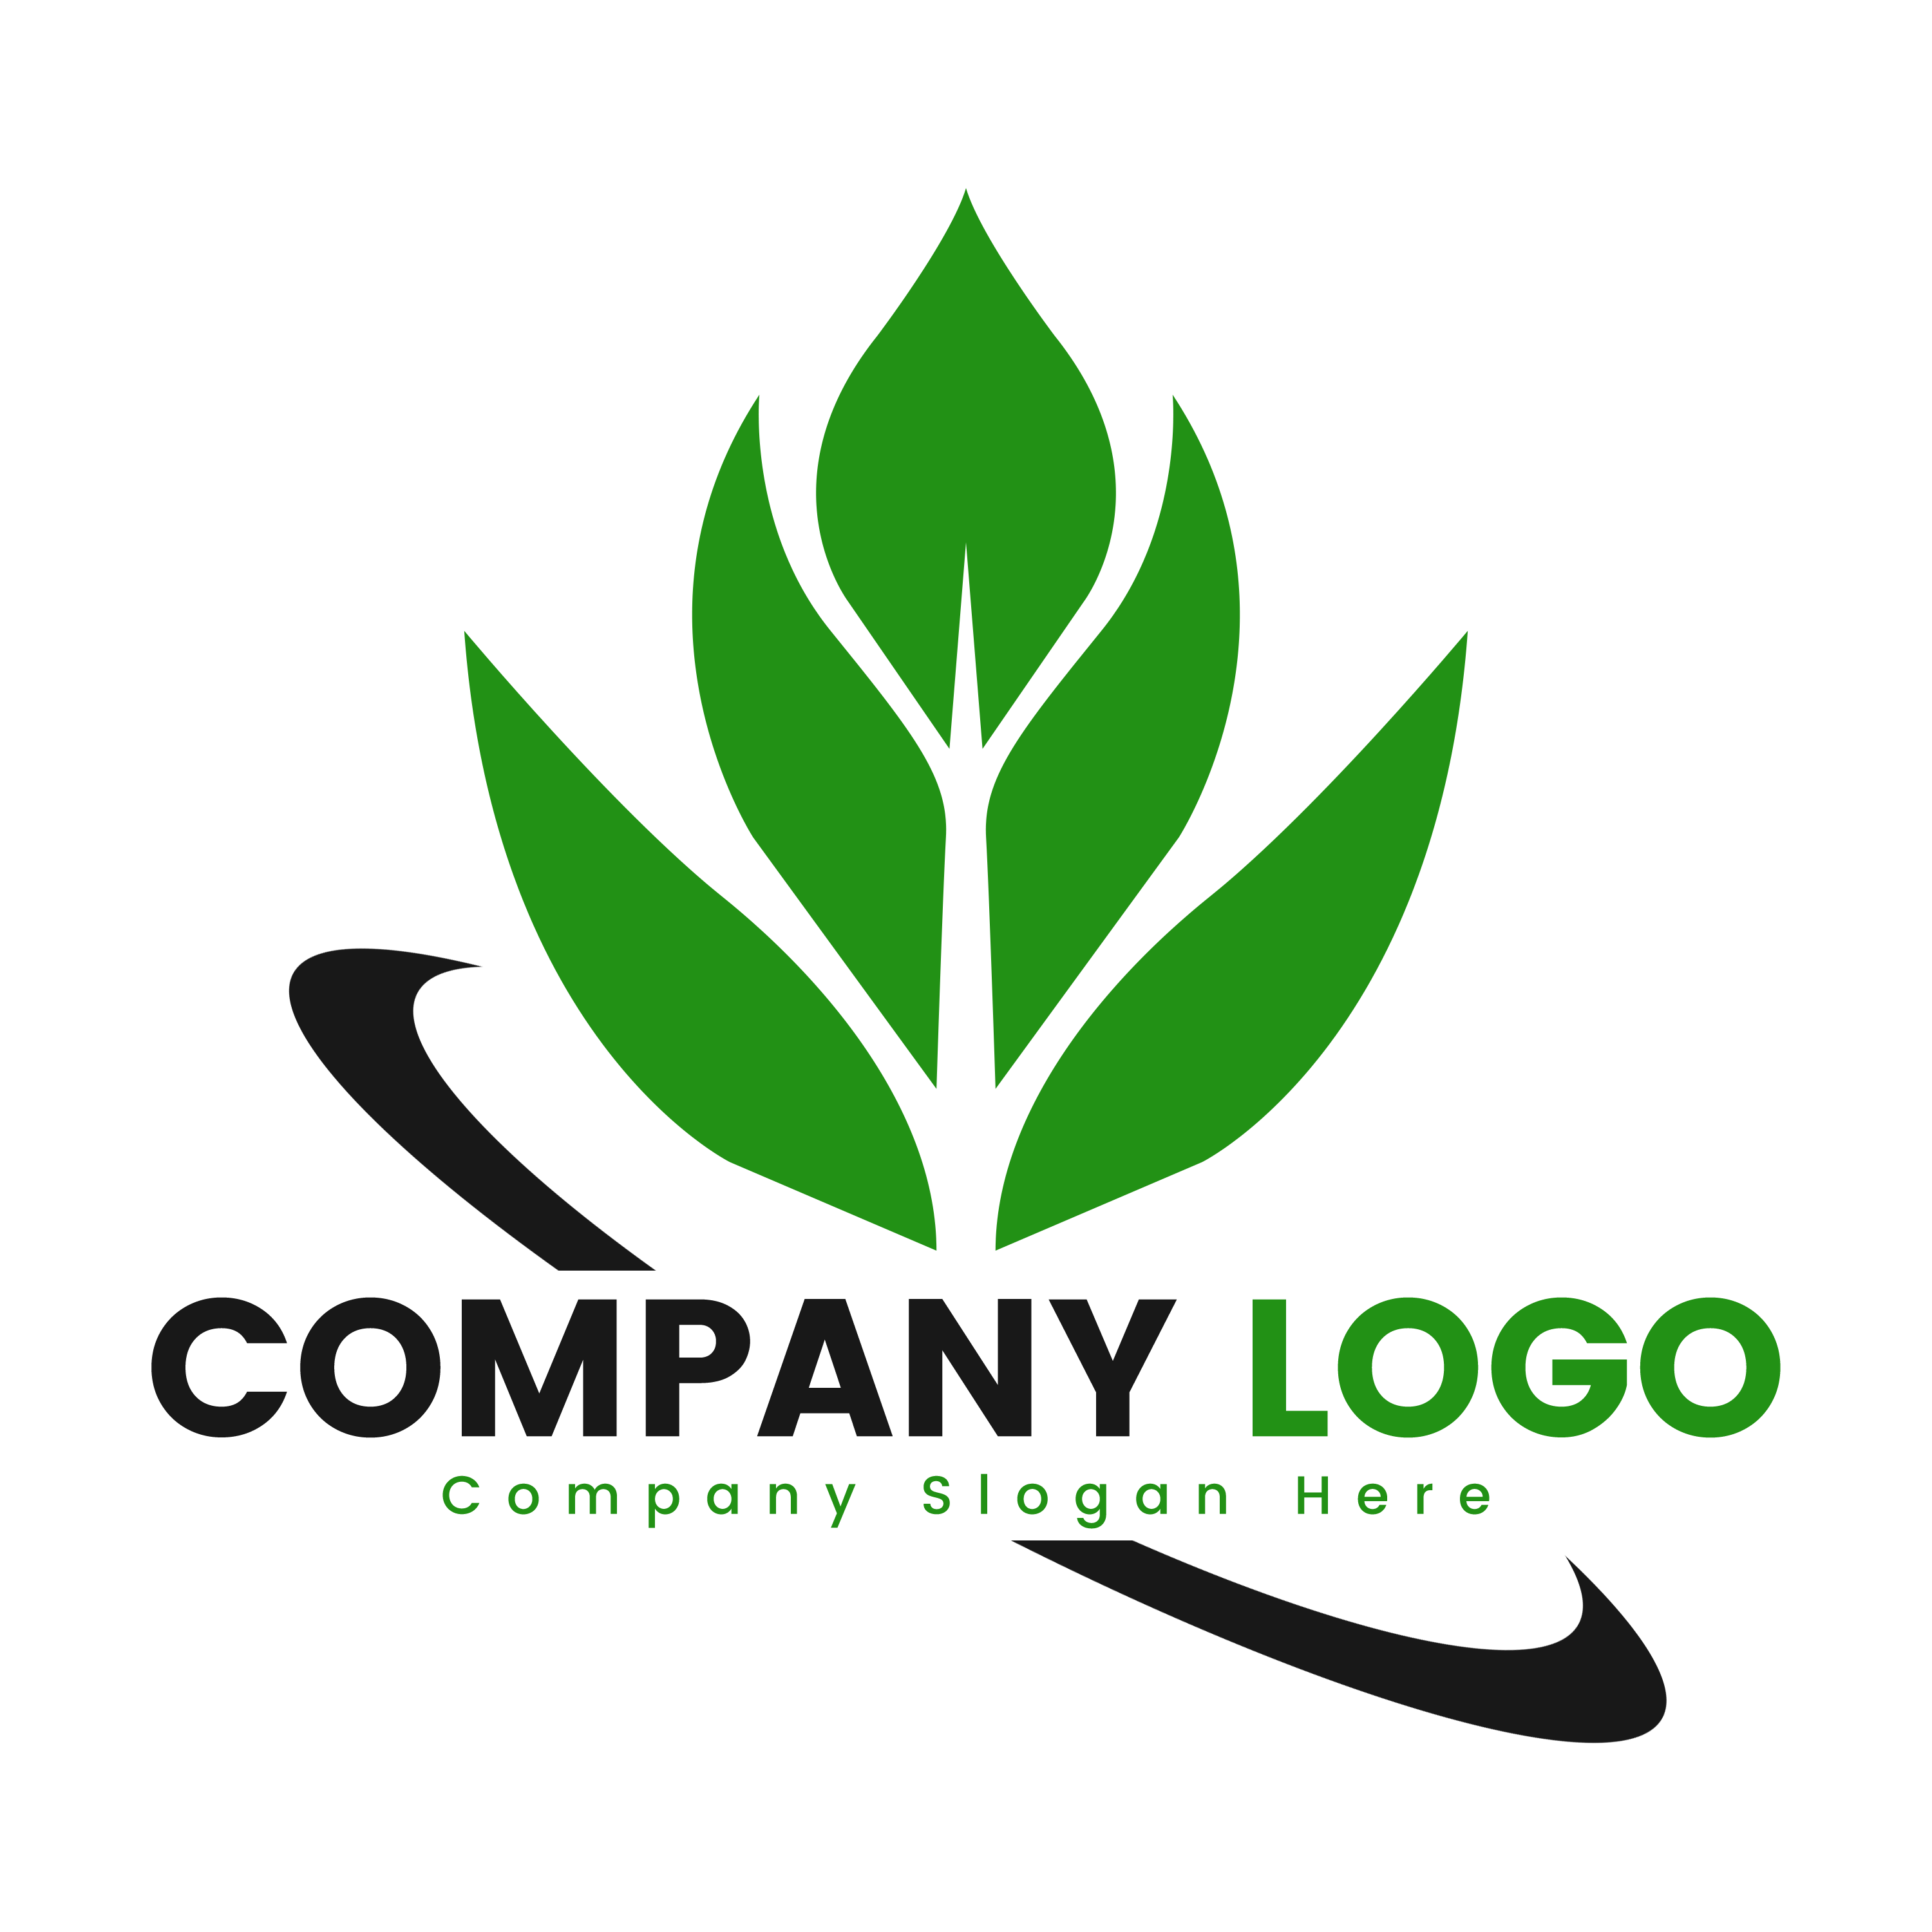 Floral Company Logo Design